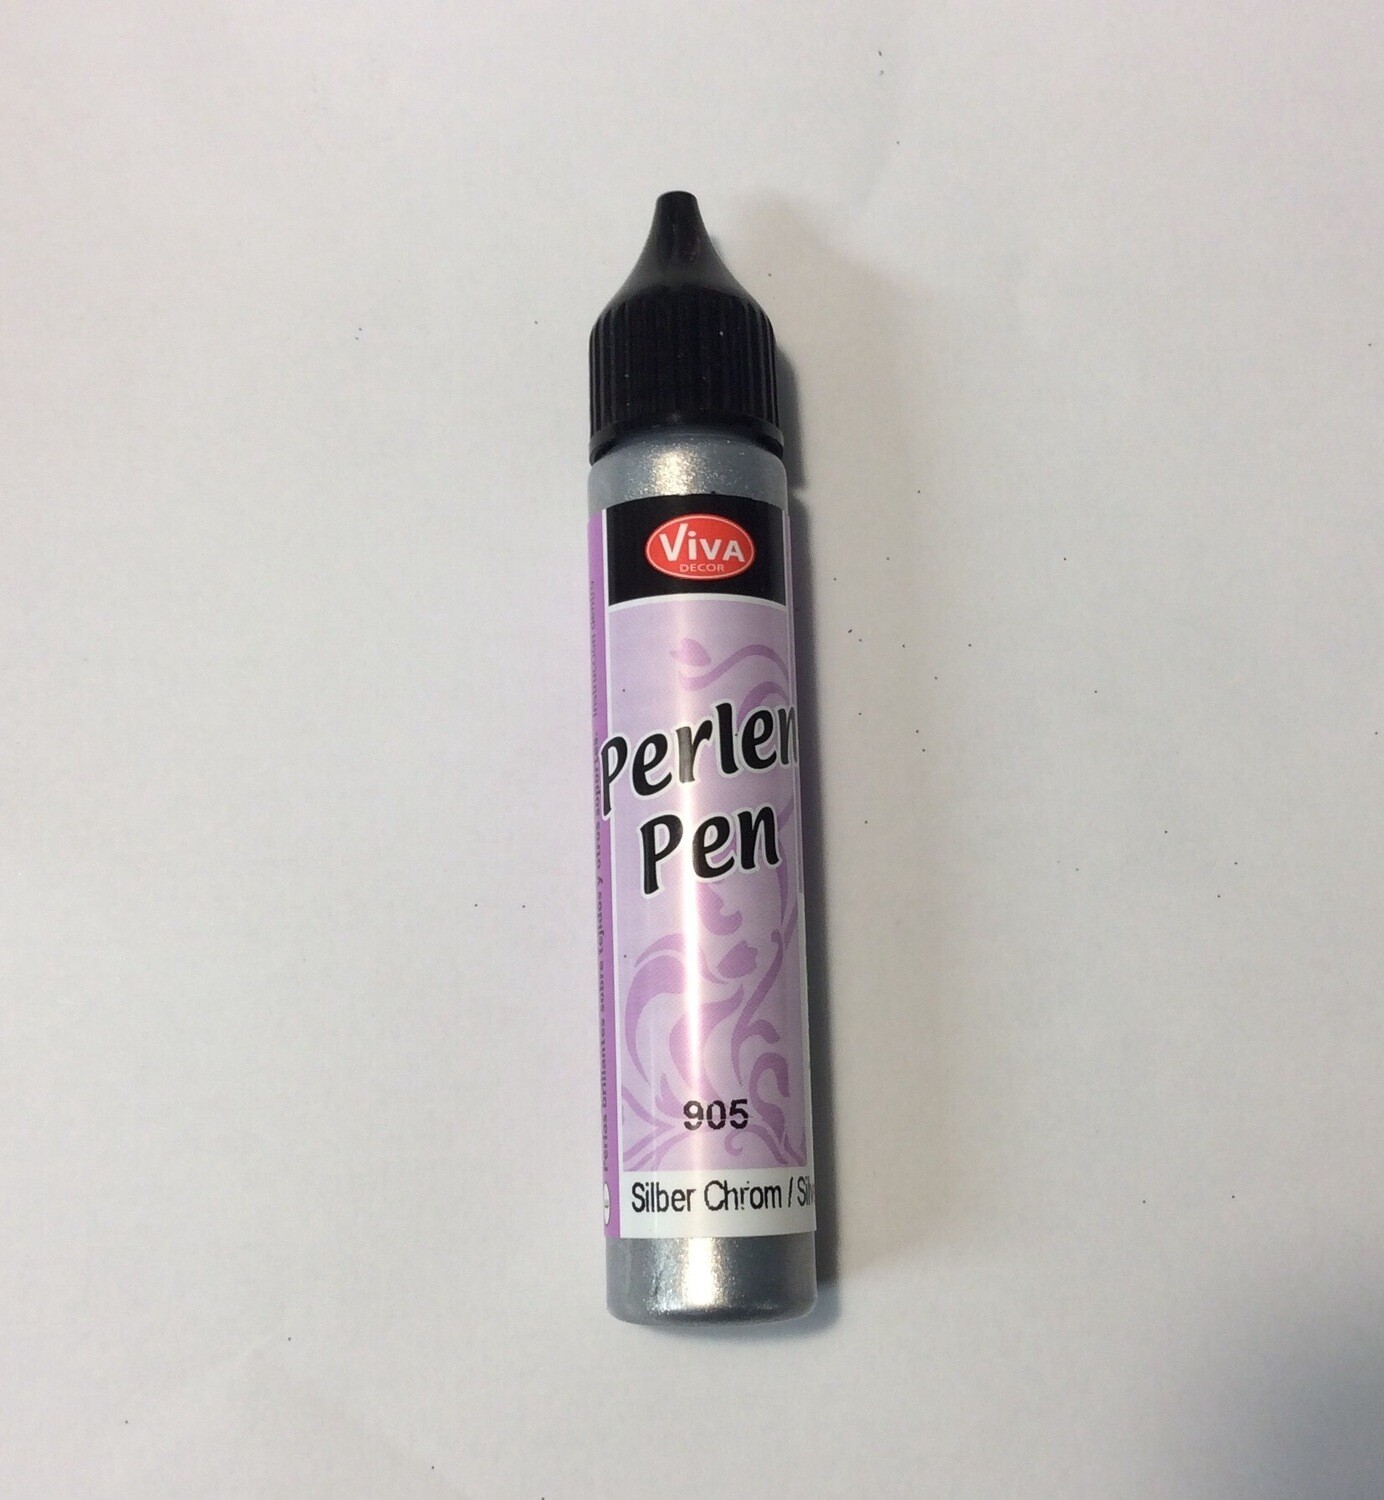 Viva Pearl Pen (Silver Chrome)